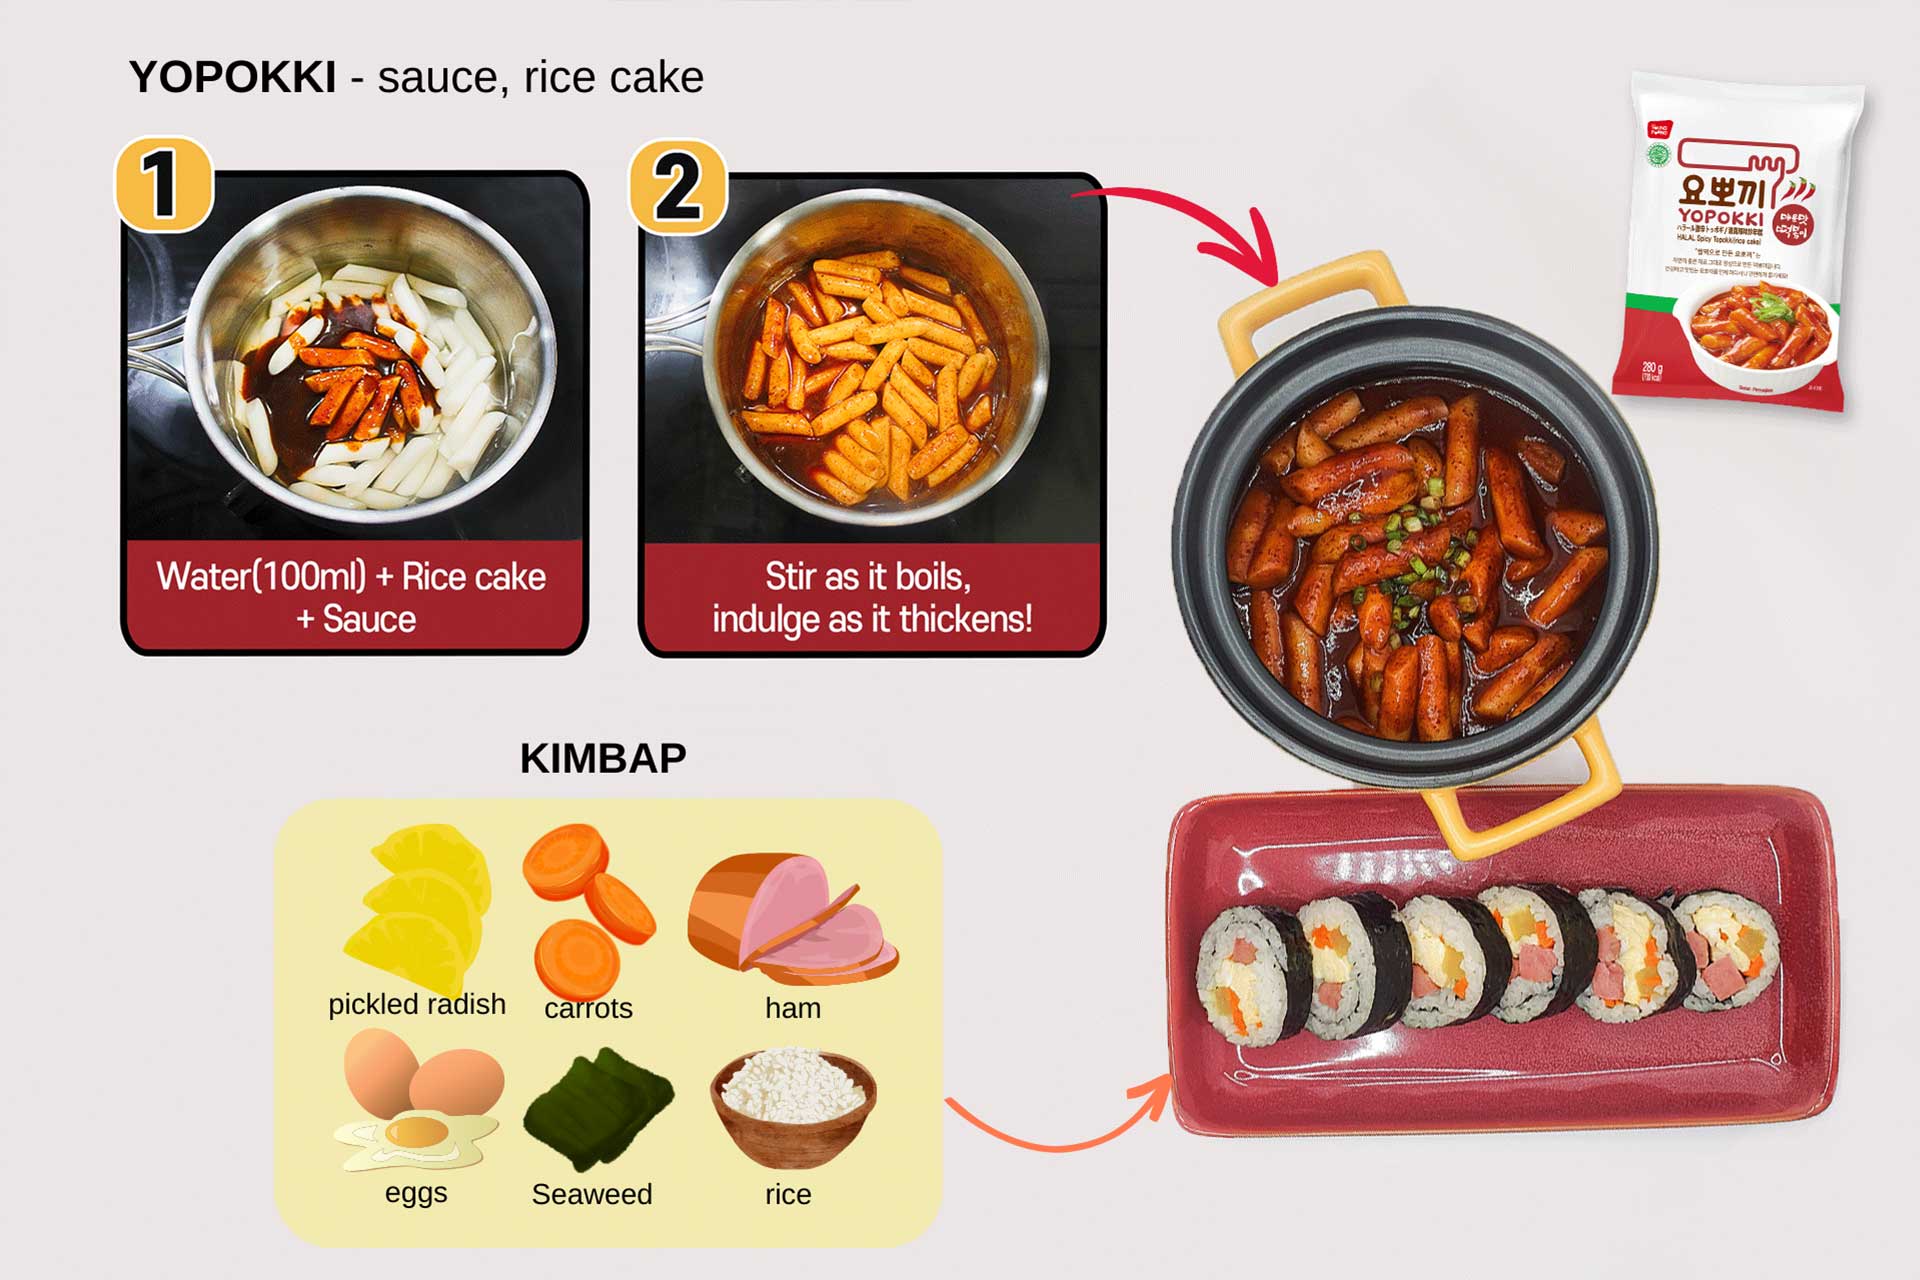 yopokki best combination tteokbokki and kimbap Halal hot spicy tteokbokki Korean street snack